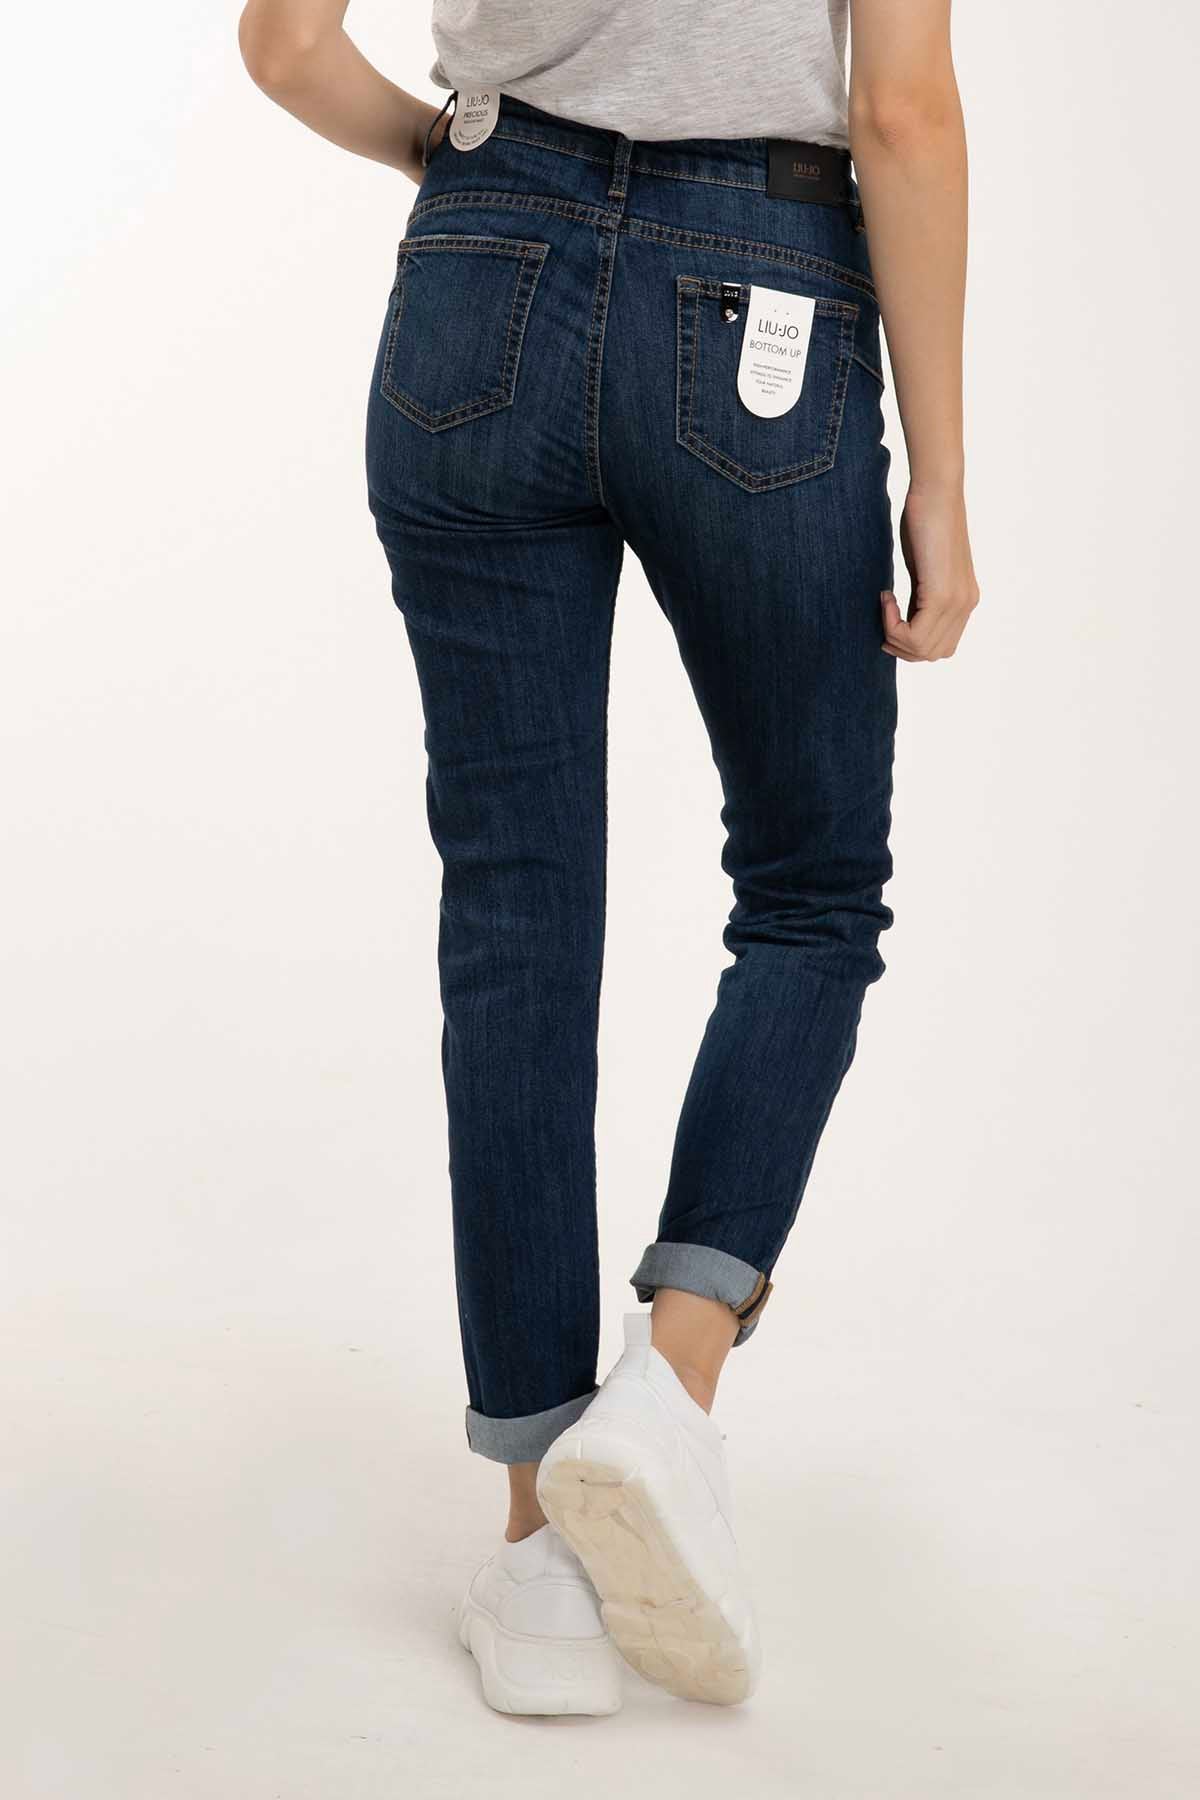 Liu Jo Bottom Up Jeans-Libas Trendy Fashion Store